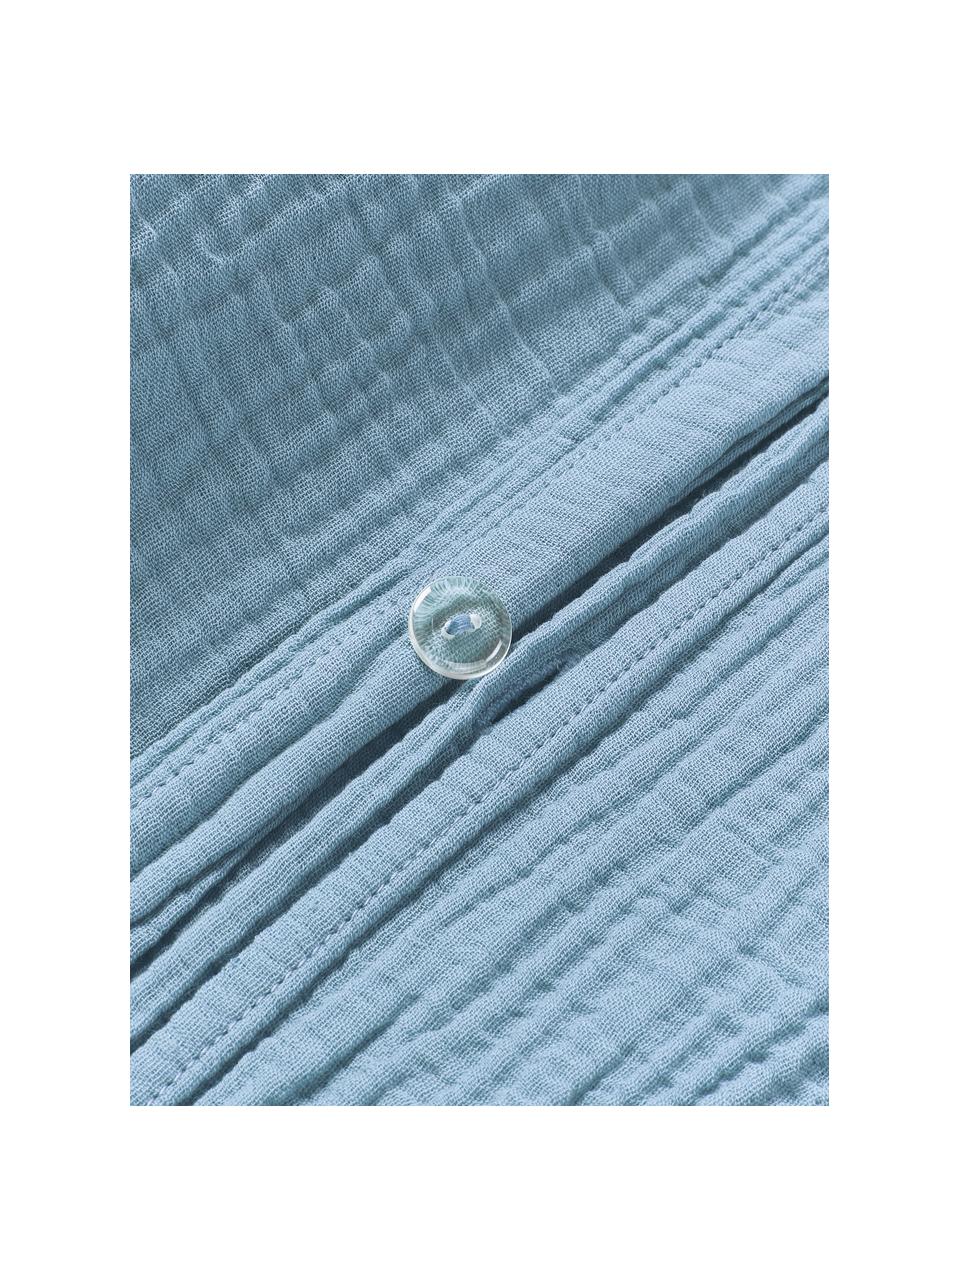 Mousseline dekbedovertrek Odile, Weeftechniek: mousseline Draaddichtheid, Grijsblauw, B 200 x L 200 cm